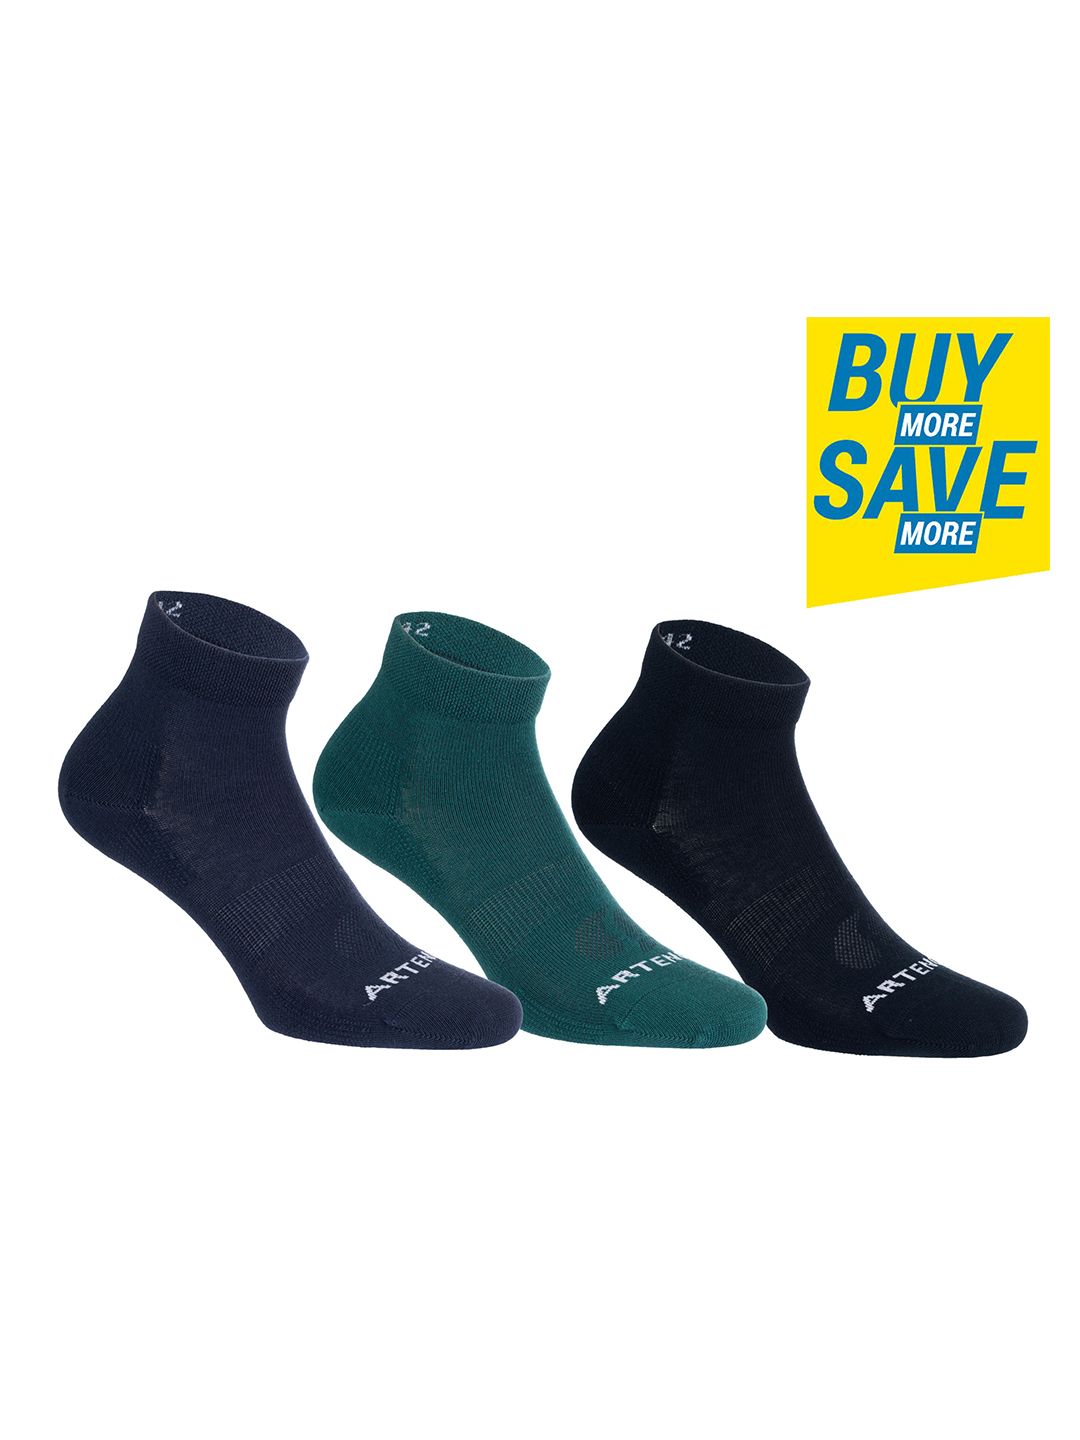 Artengo By Decathlon Unisex Set Of 3 Patterned Socks Price in India